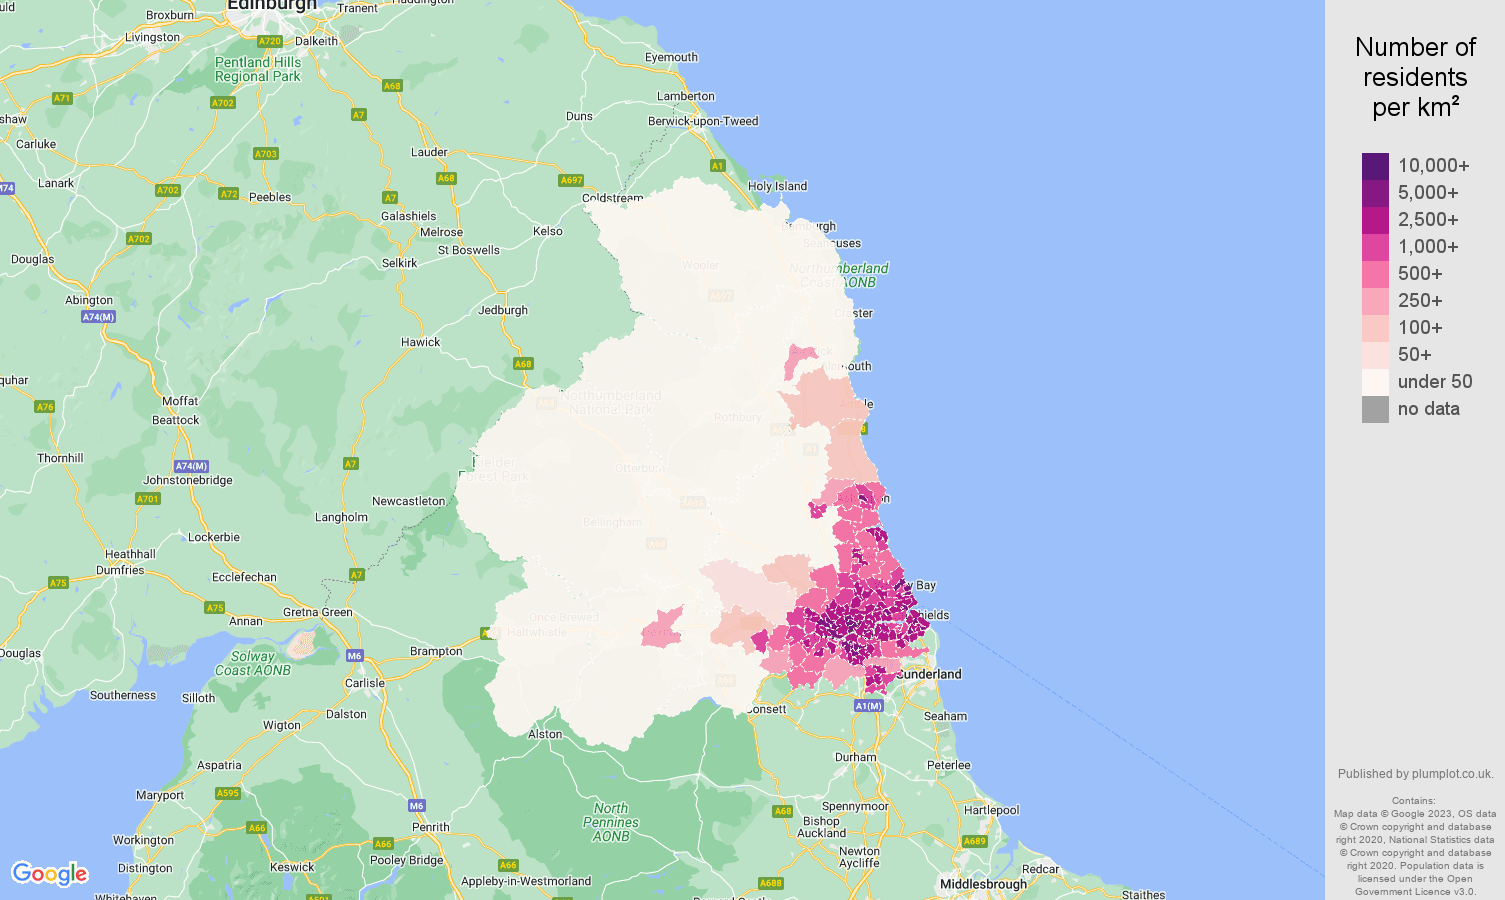 Newcastle upon Tyne population density map